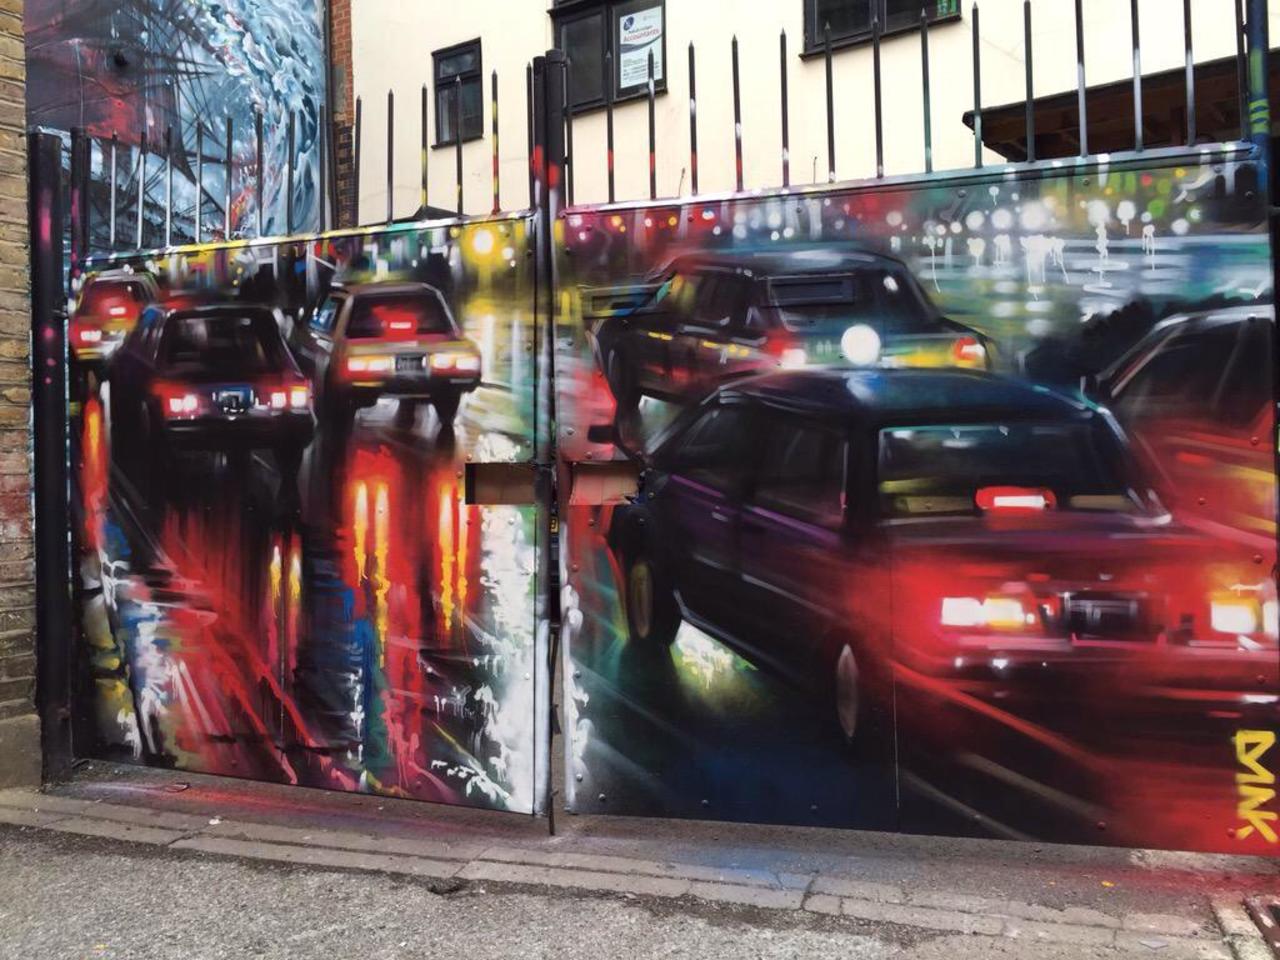 New Street Art by DanKitchener in Brick Lane London 

#art #graffiti #mural #streetart http://t.co/LMLKWbMr4w